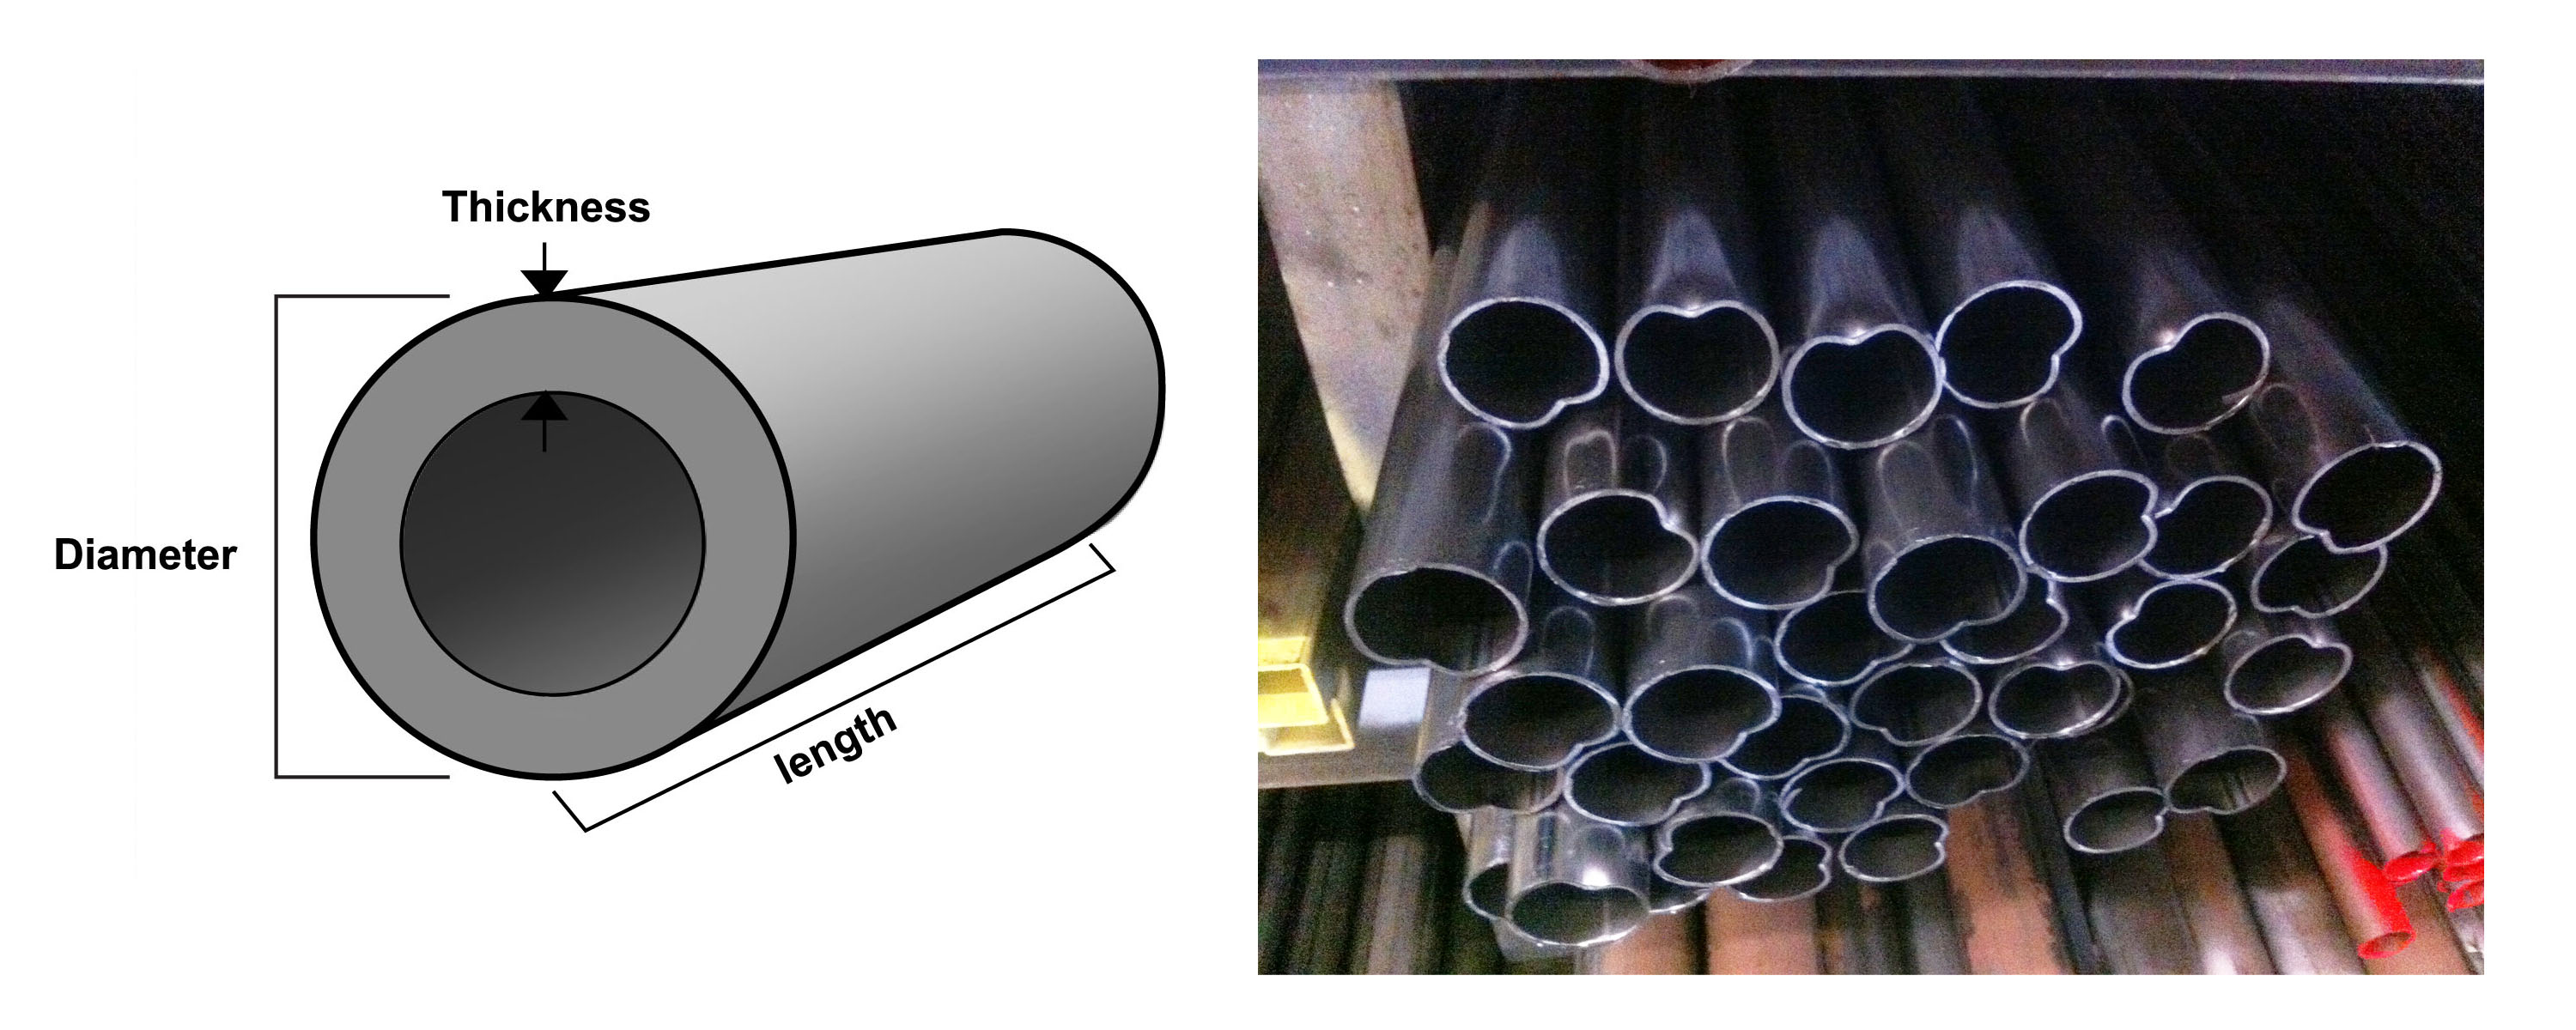 New Metal Alloy 1020/1026 DOM Steel Round Tubing 7/8 X .156 X 36 SH-1696M Warranity by KolotovichTool 